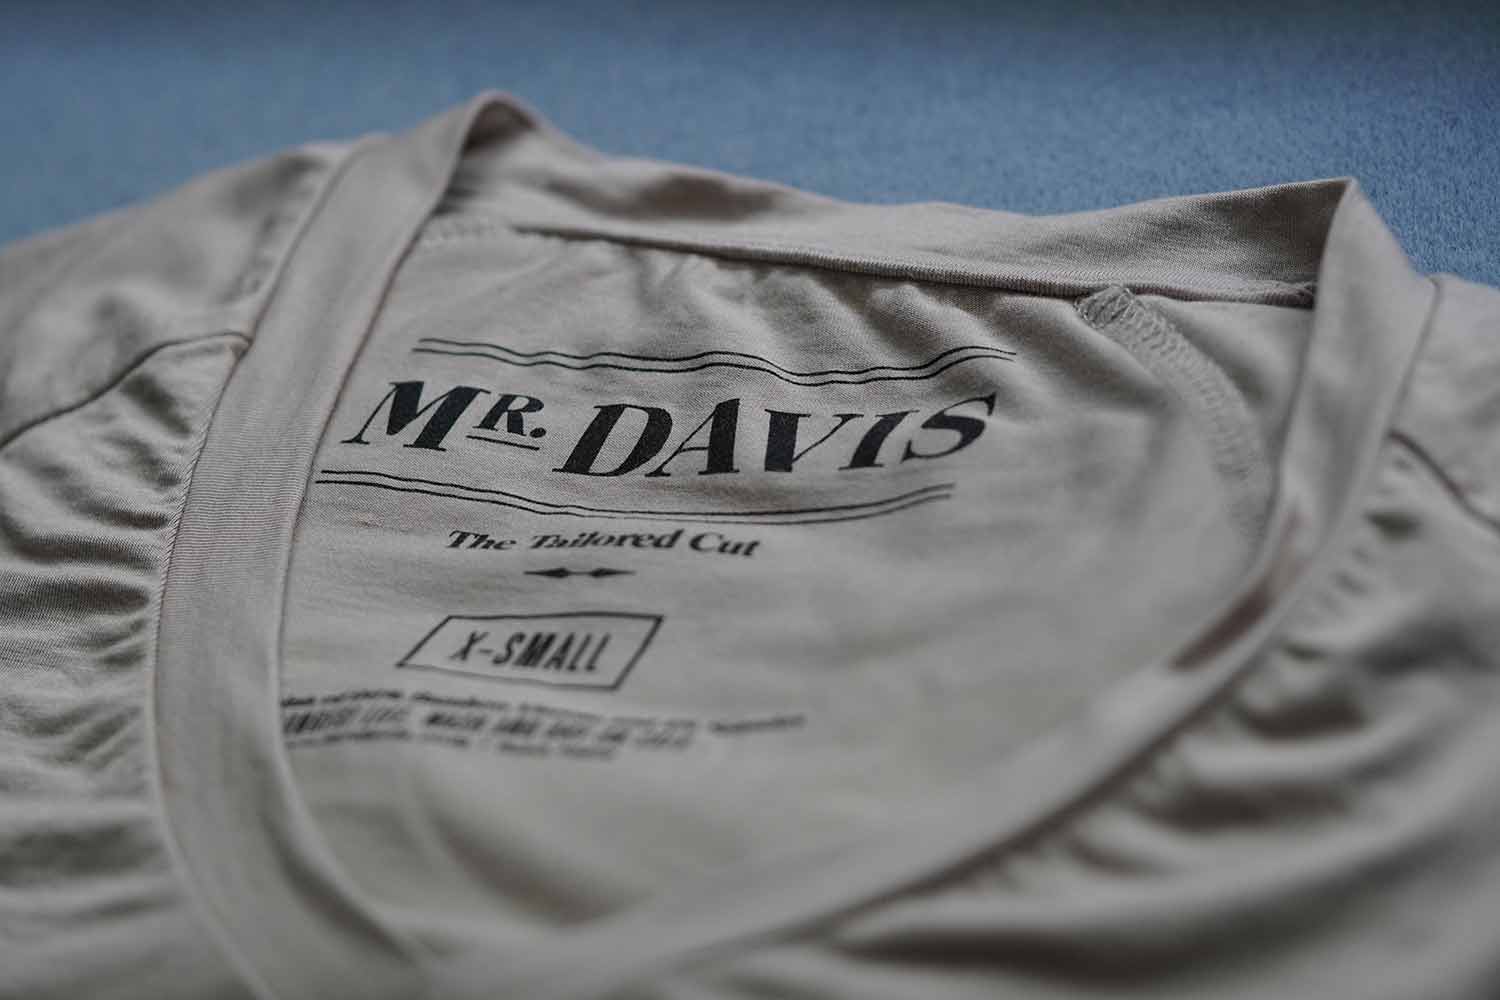 mr davis tailored cut undershirt details